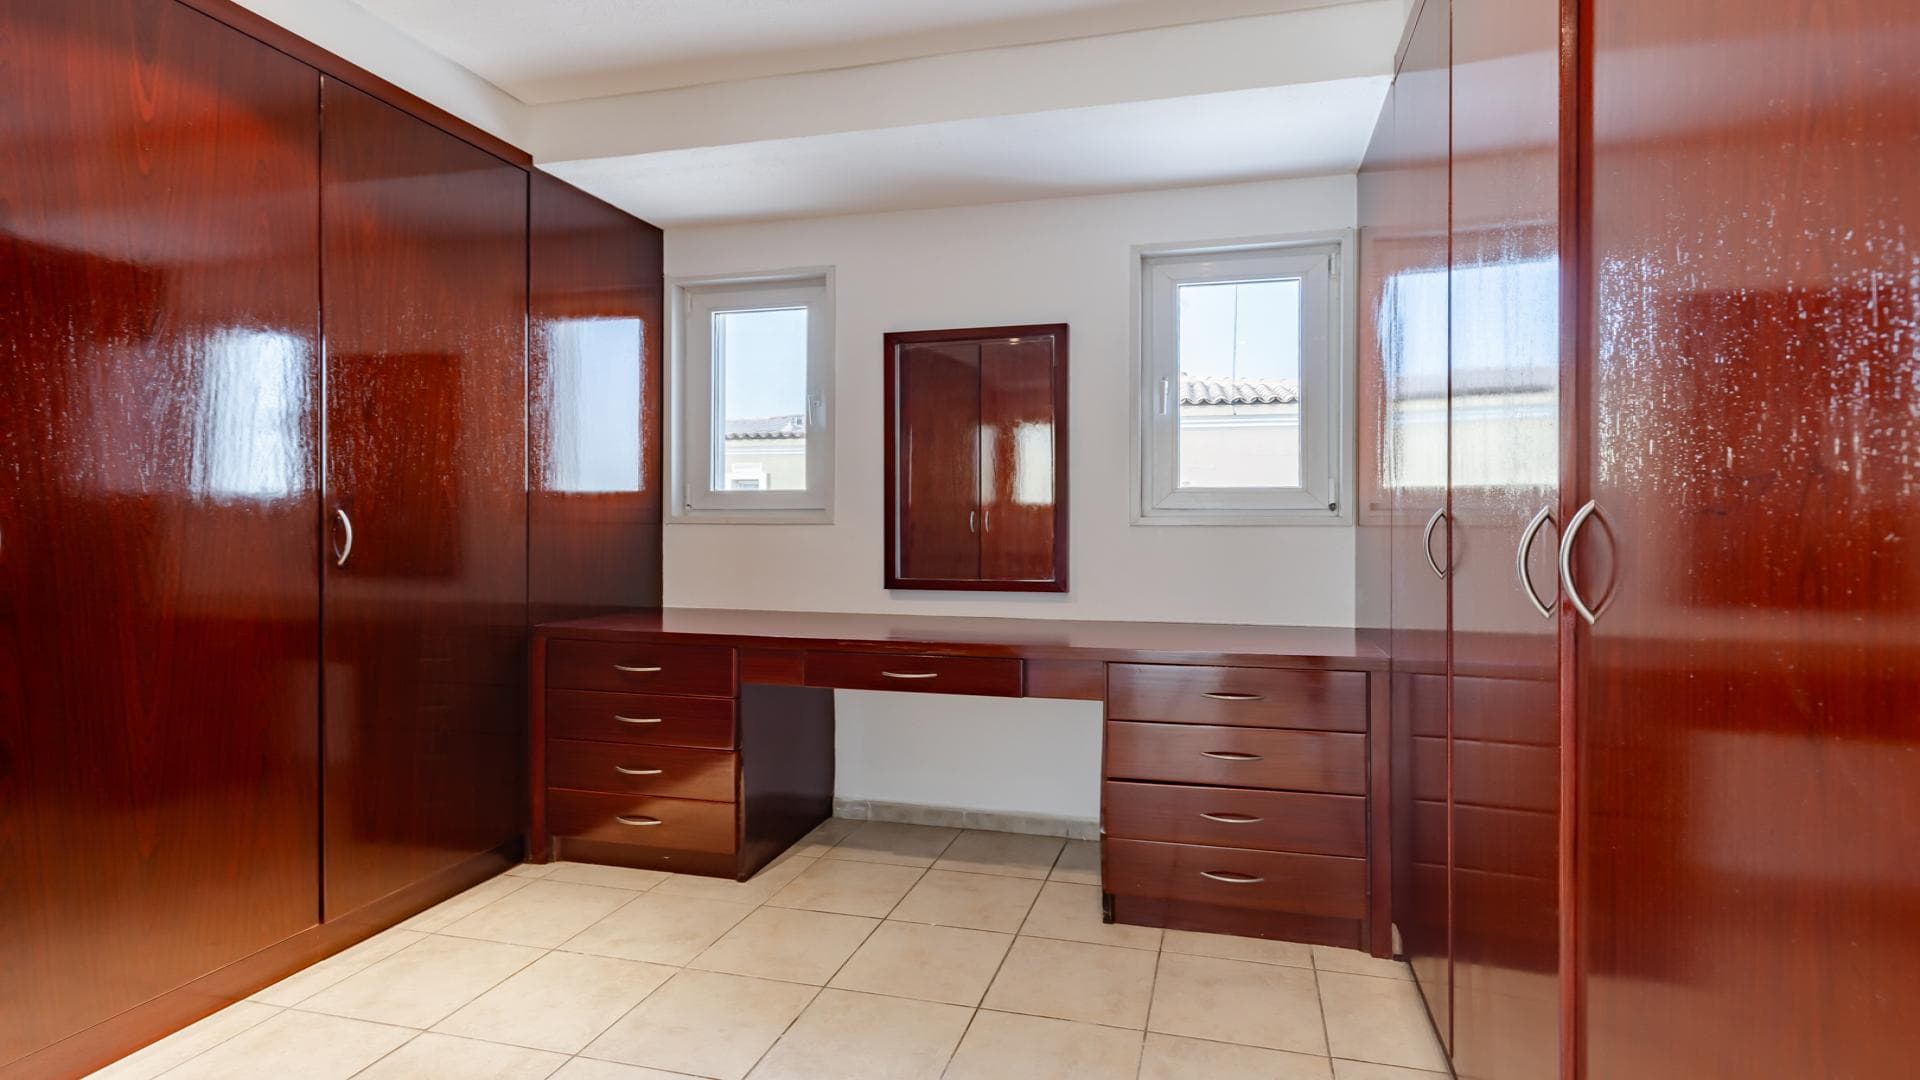 5 Bedroom Villa For Rent Al Thamam 36 Lp39013 50750964b234400.jpg